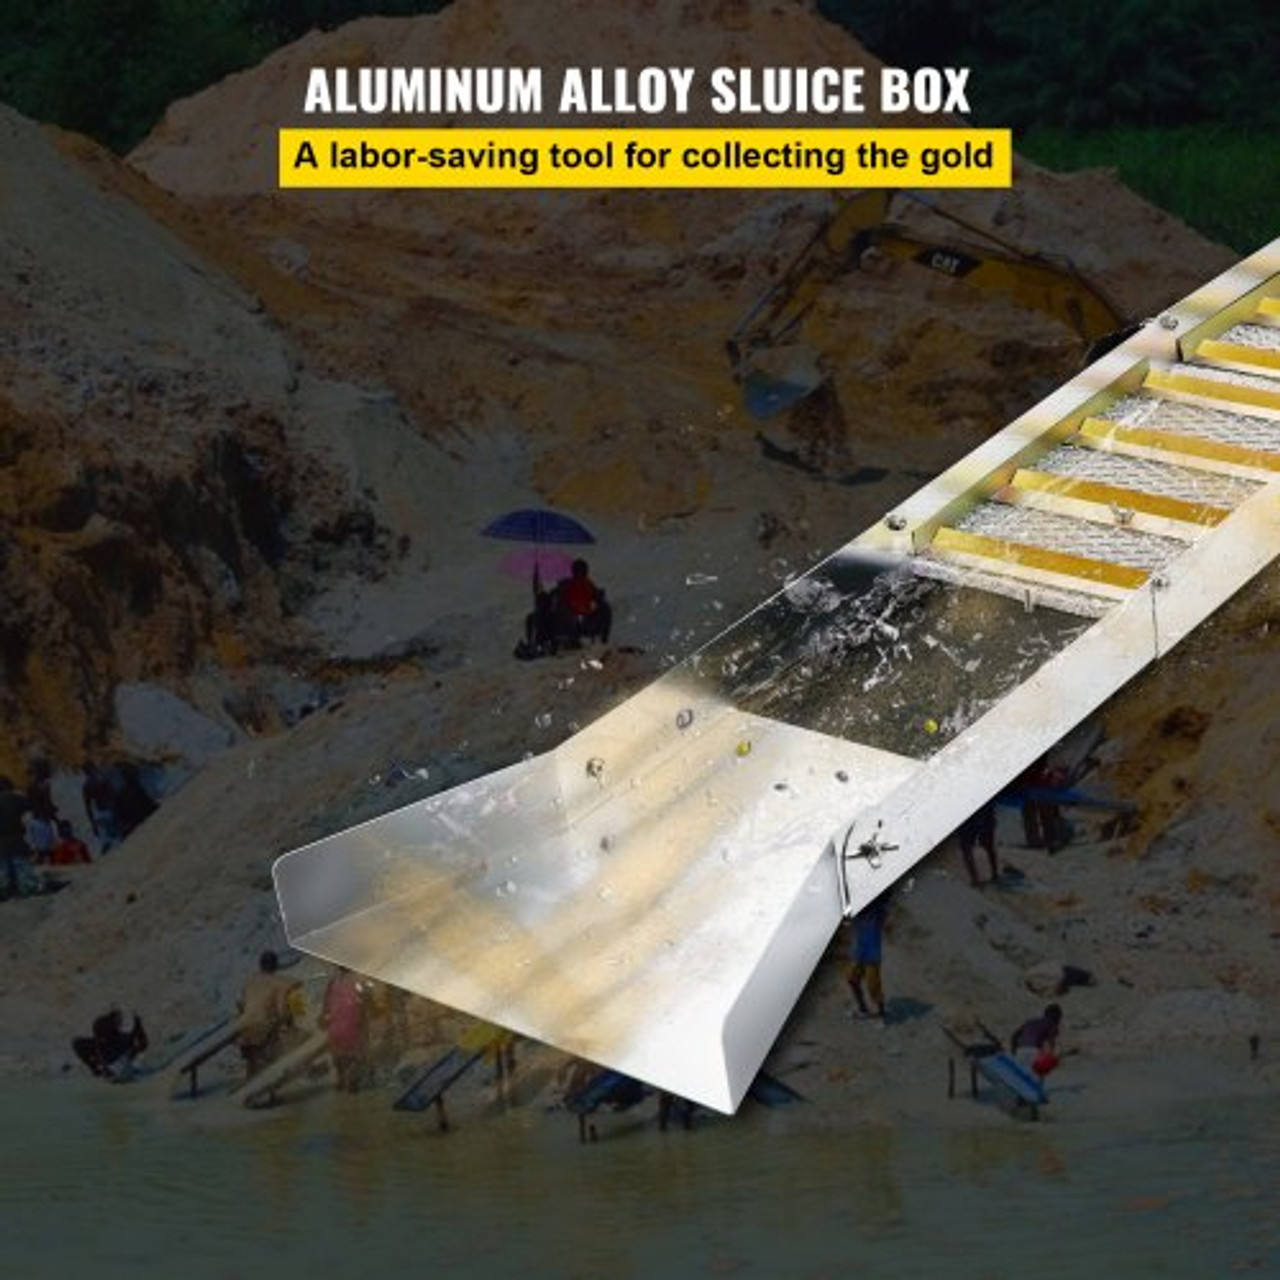 Folding Aluminum Alloy Sluice Box, Compact 50" Sluice Boxes for Gold, Lightweight Gold Sluice Equipment, Portable Sluice Boxes w/Miner's Moss, River, Creek, Gold Panning, Prospecting, Dredging